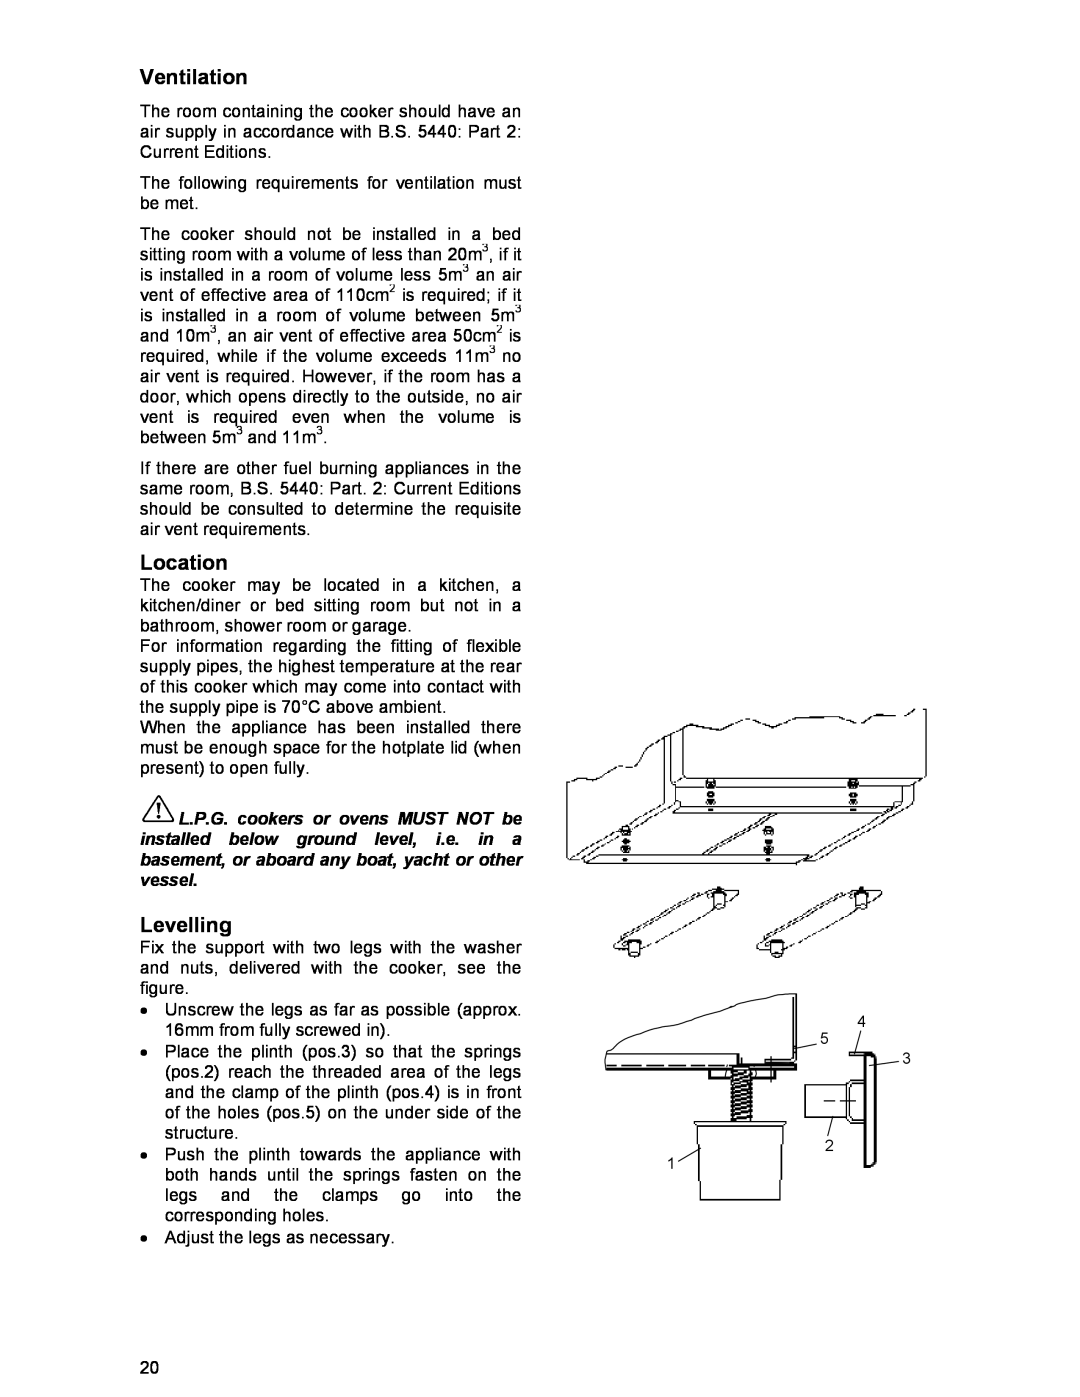 Moffat GSC 5061 manual Ventilation, Location, Levelling 